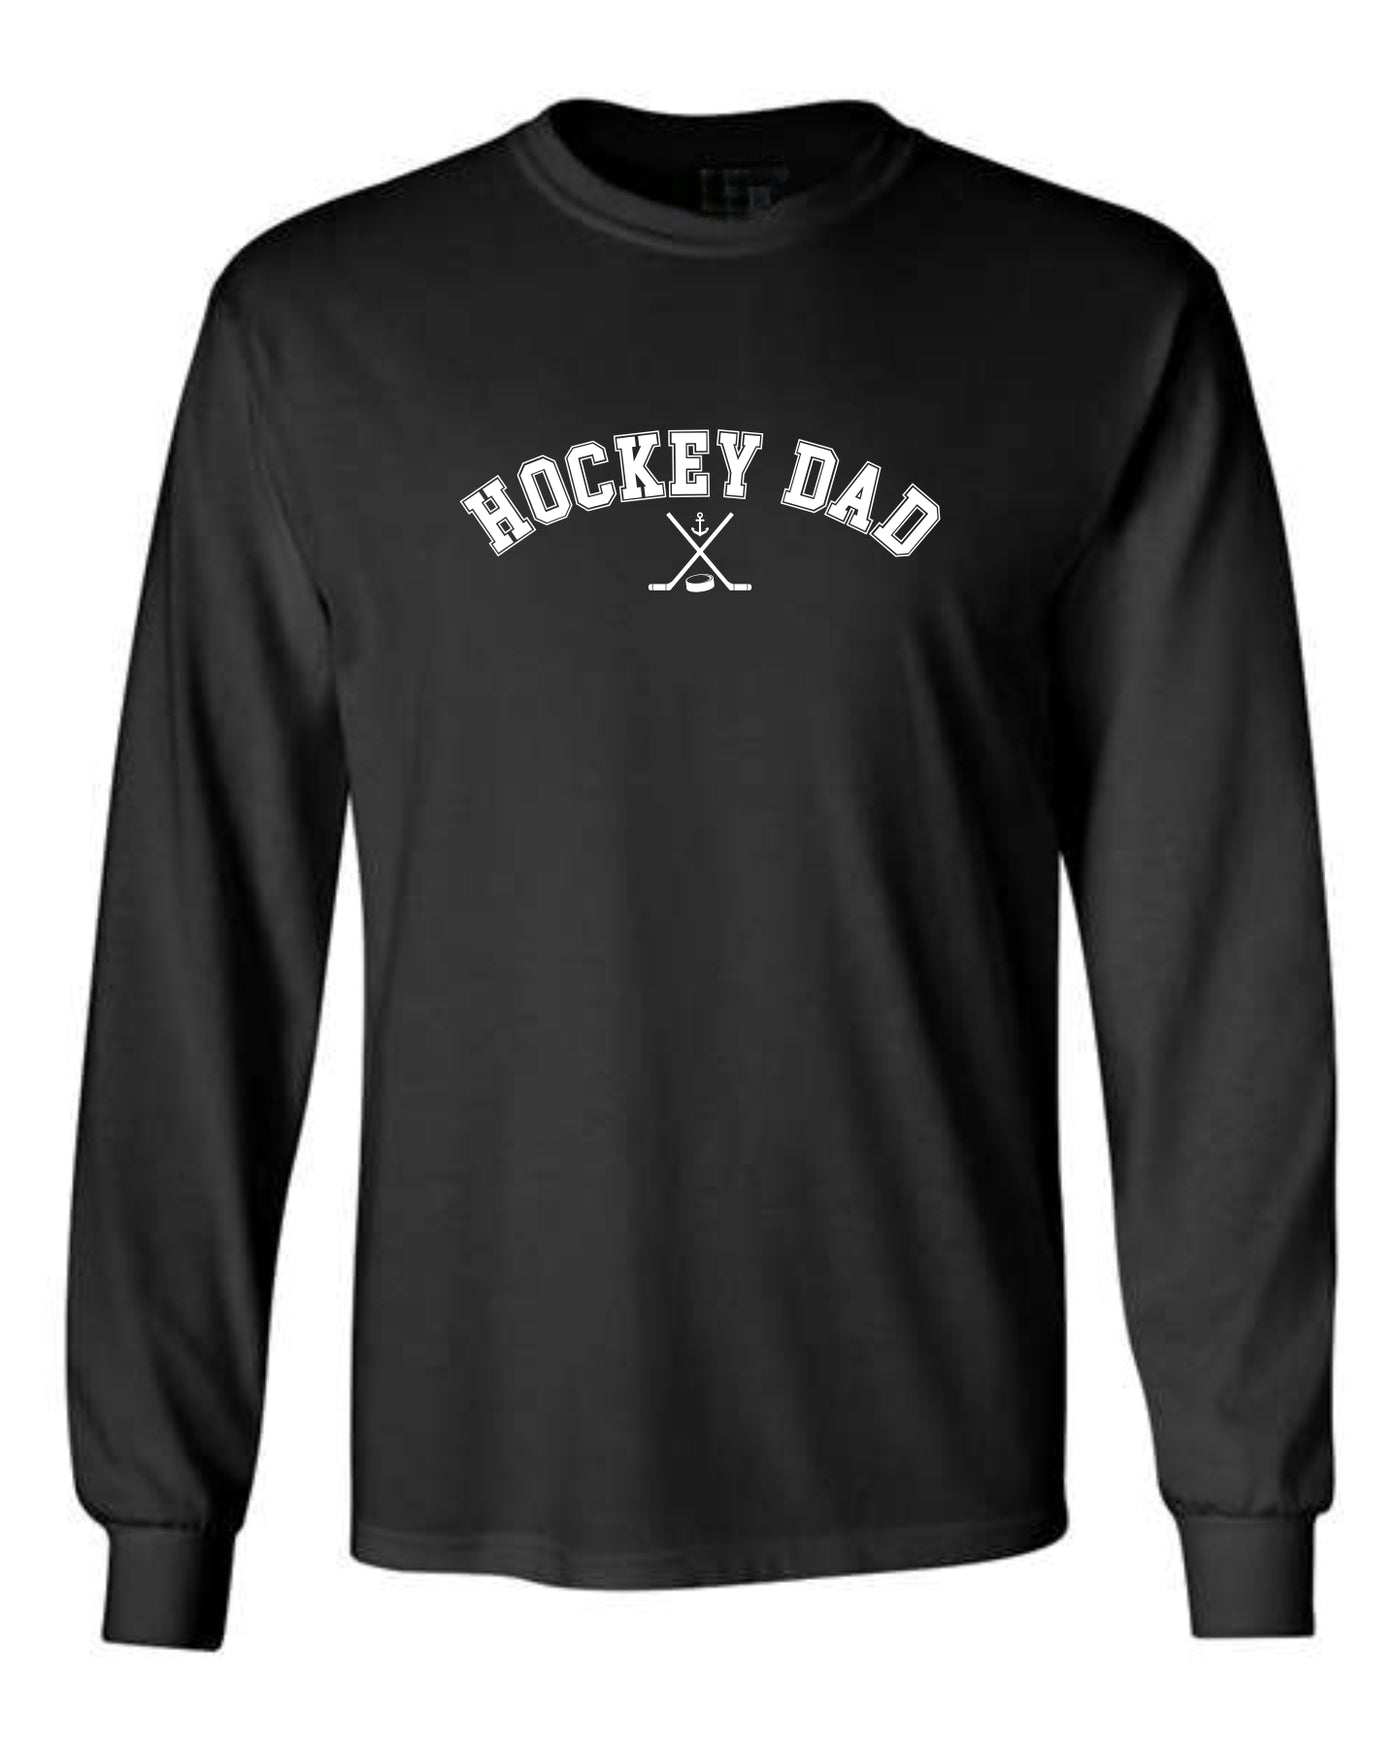 "Hockey Dad" Unisex Long Sleeve Shirt